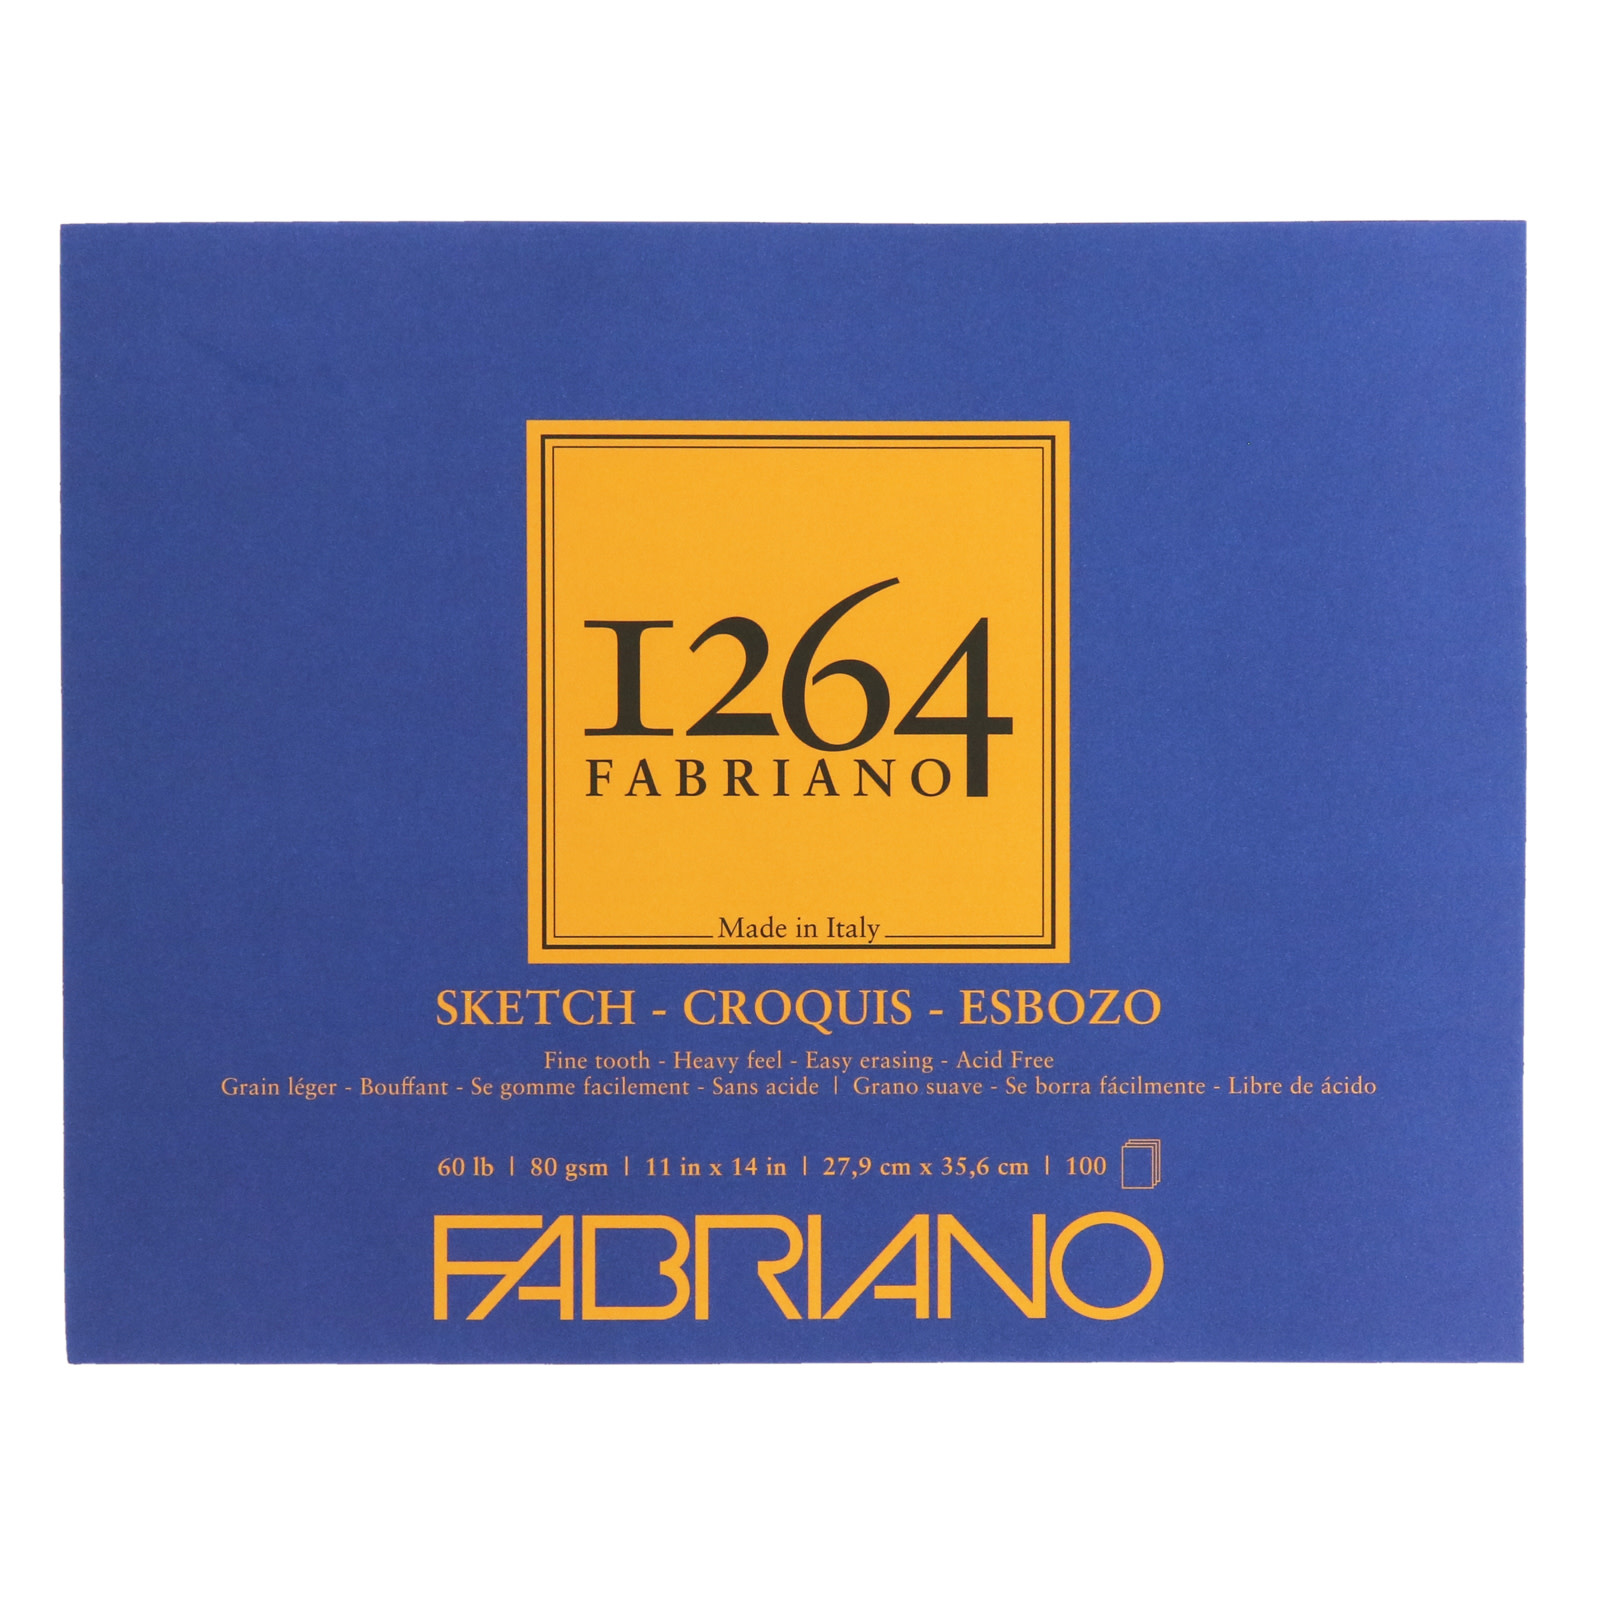 Fabriano 1264 Sketch Pads, Glue-Bound, 11" x 14